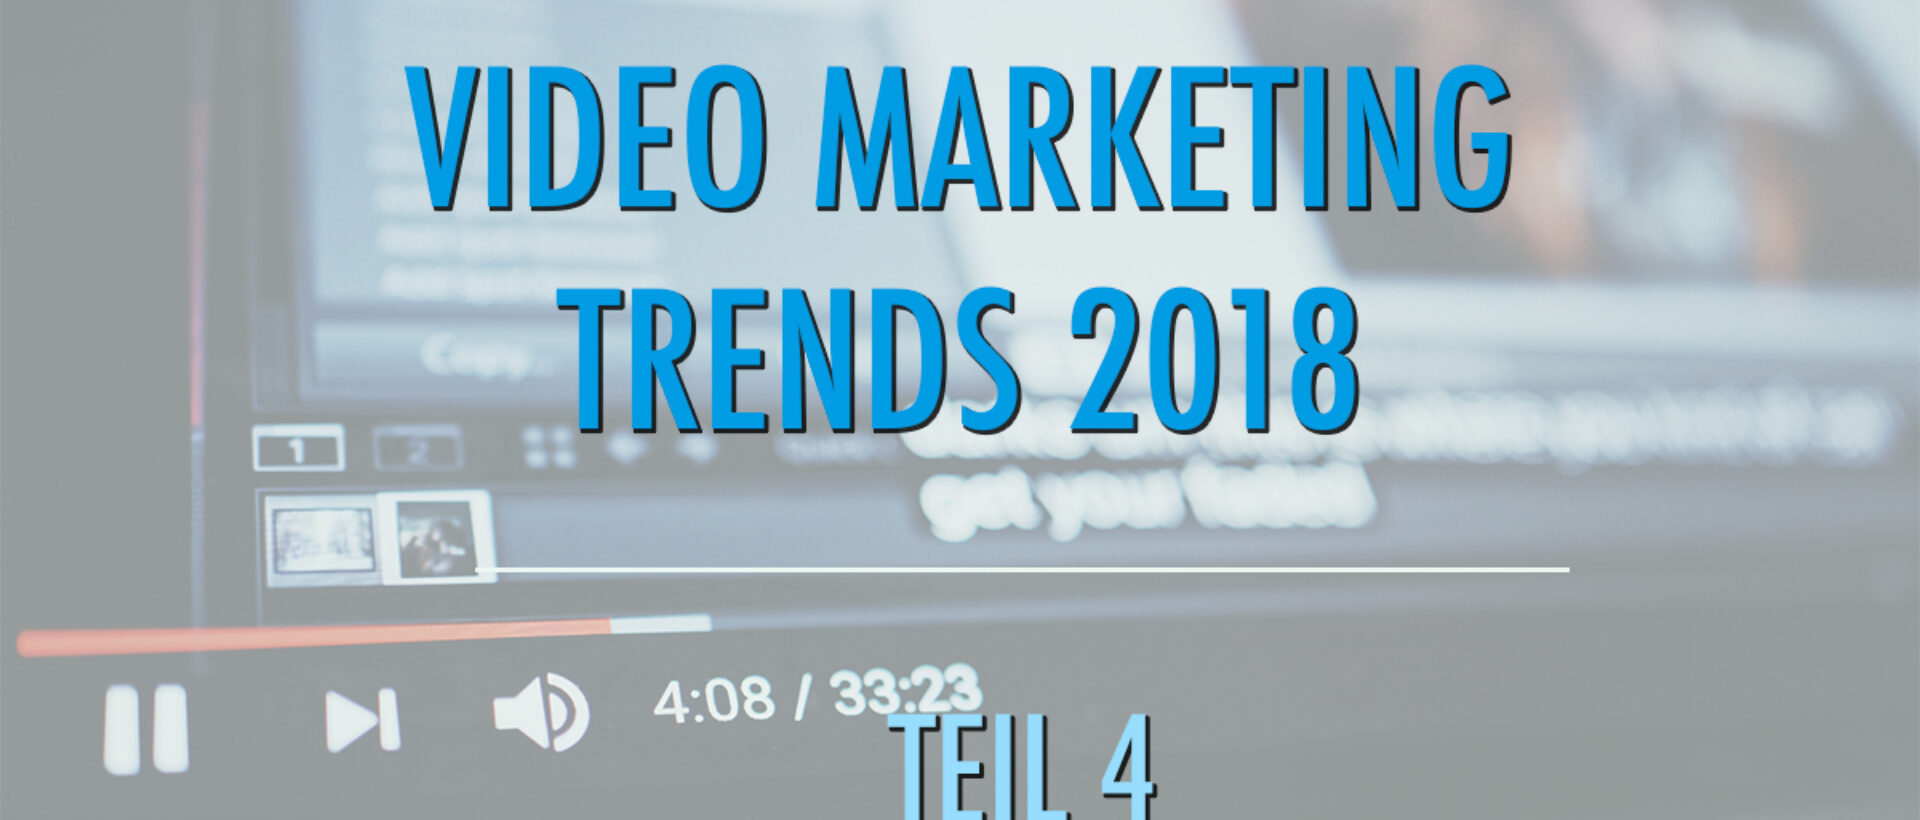 Video Marketing Trends LinkedIn